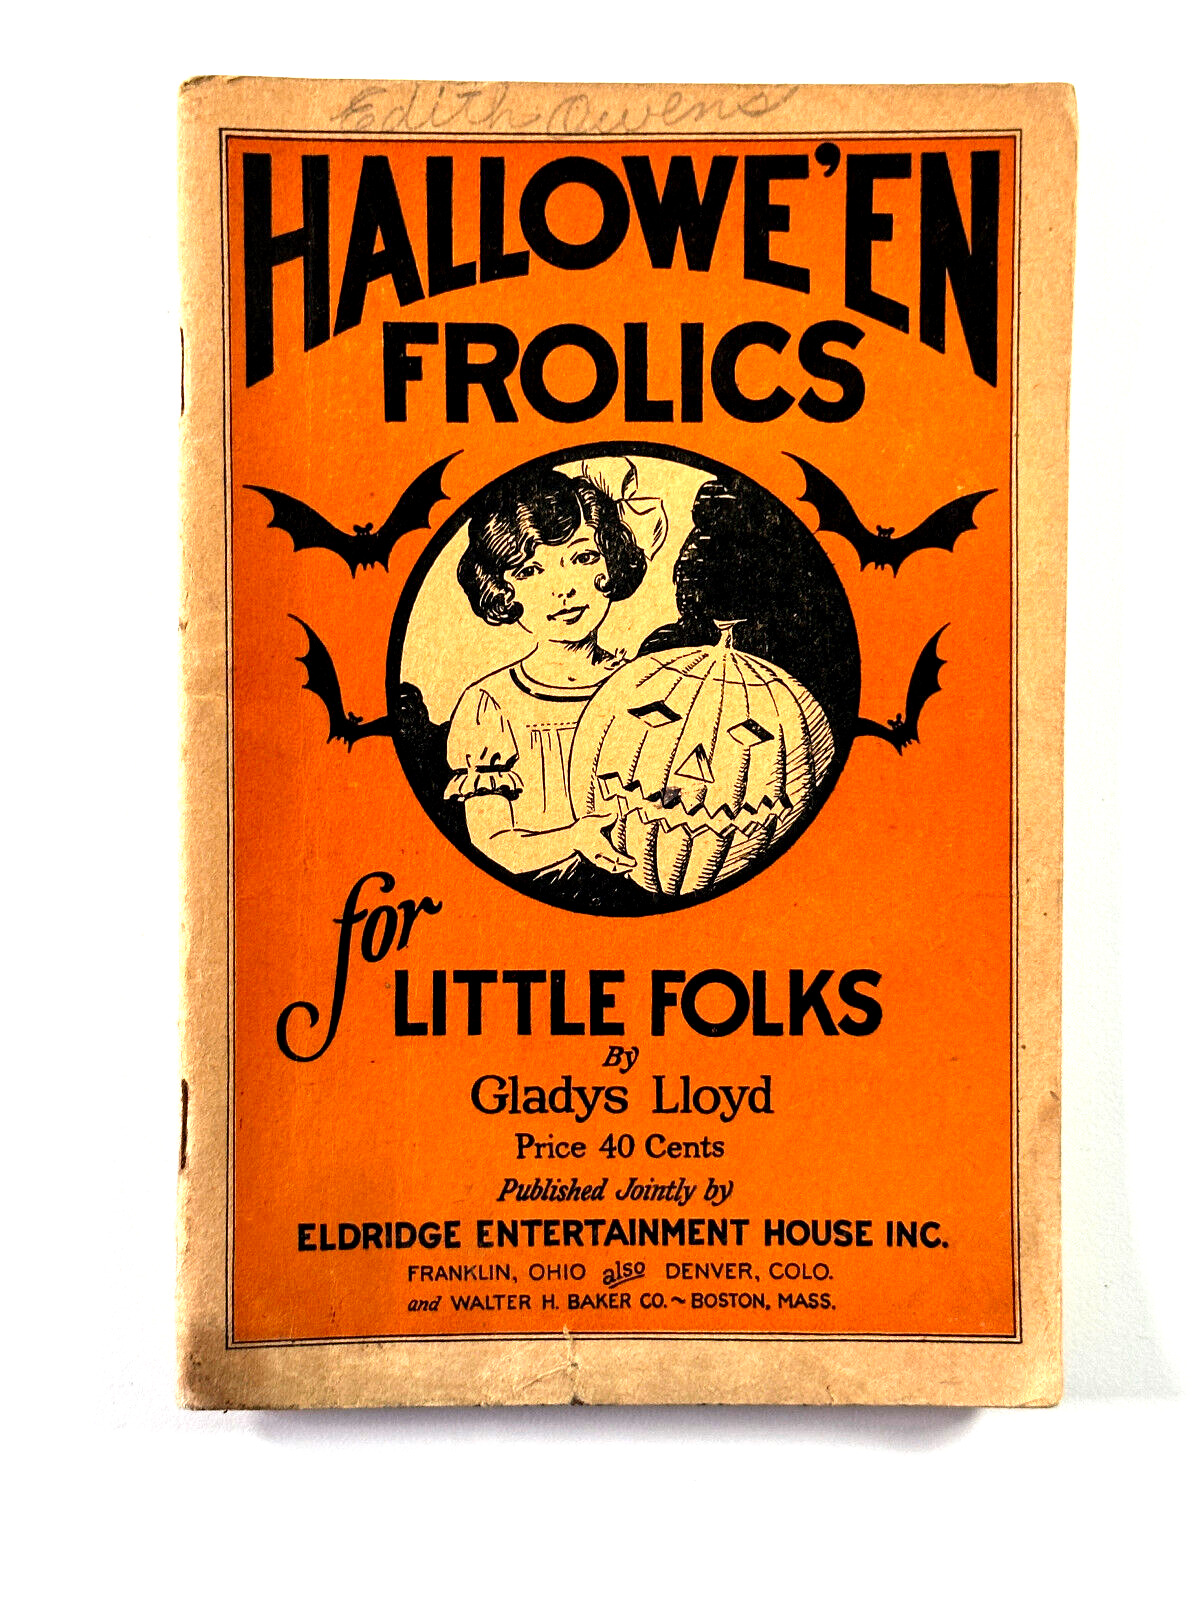 RARE 1927 Halloween Frolics Book by Gladys Lloyd Party bogie eldridge  